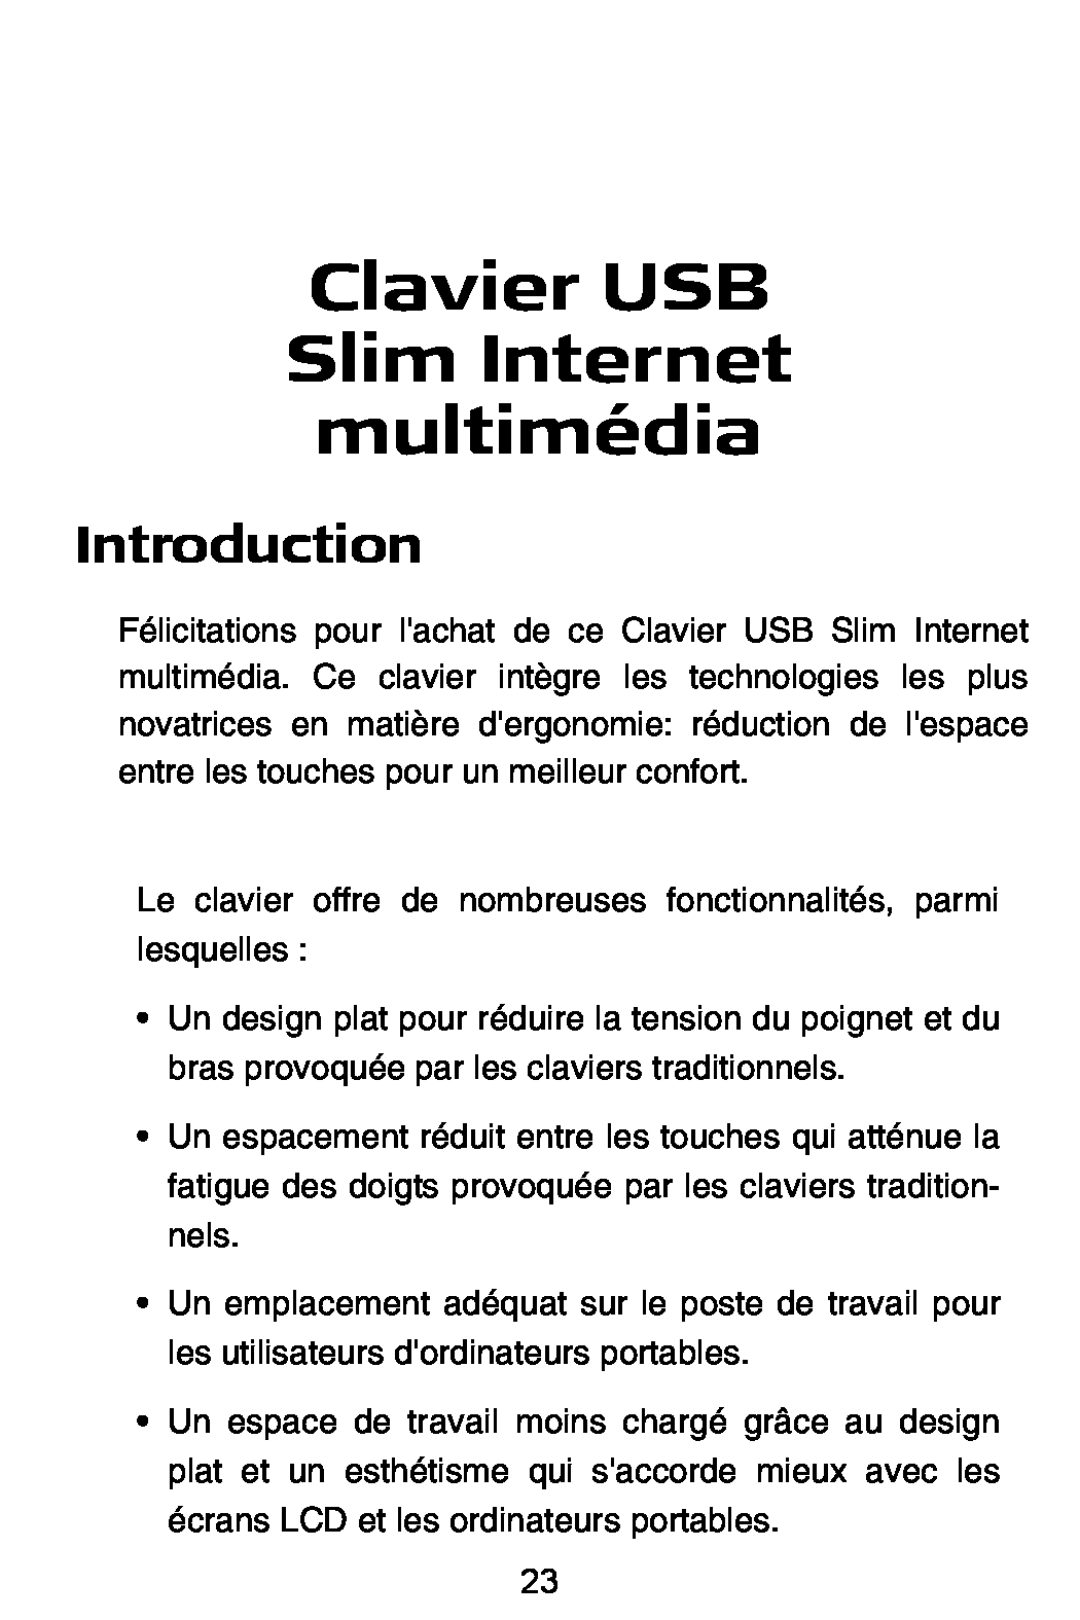 Targus slim internet multimedia USB keyboard specifications Clavier USB Slim Internet multimédia, Introduction 